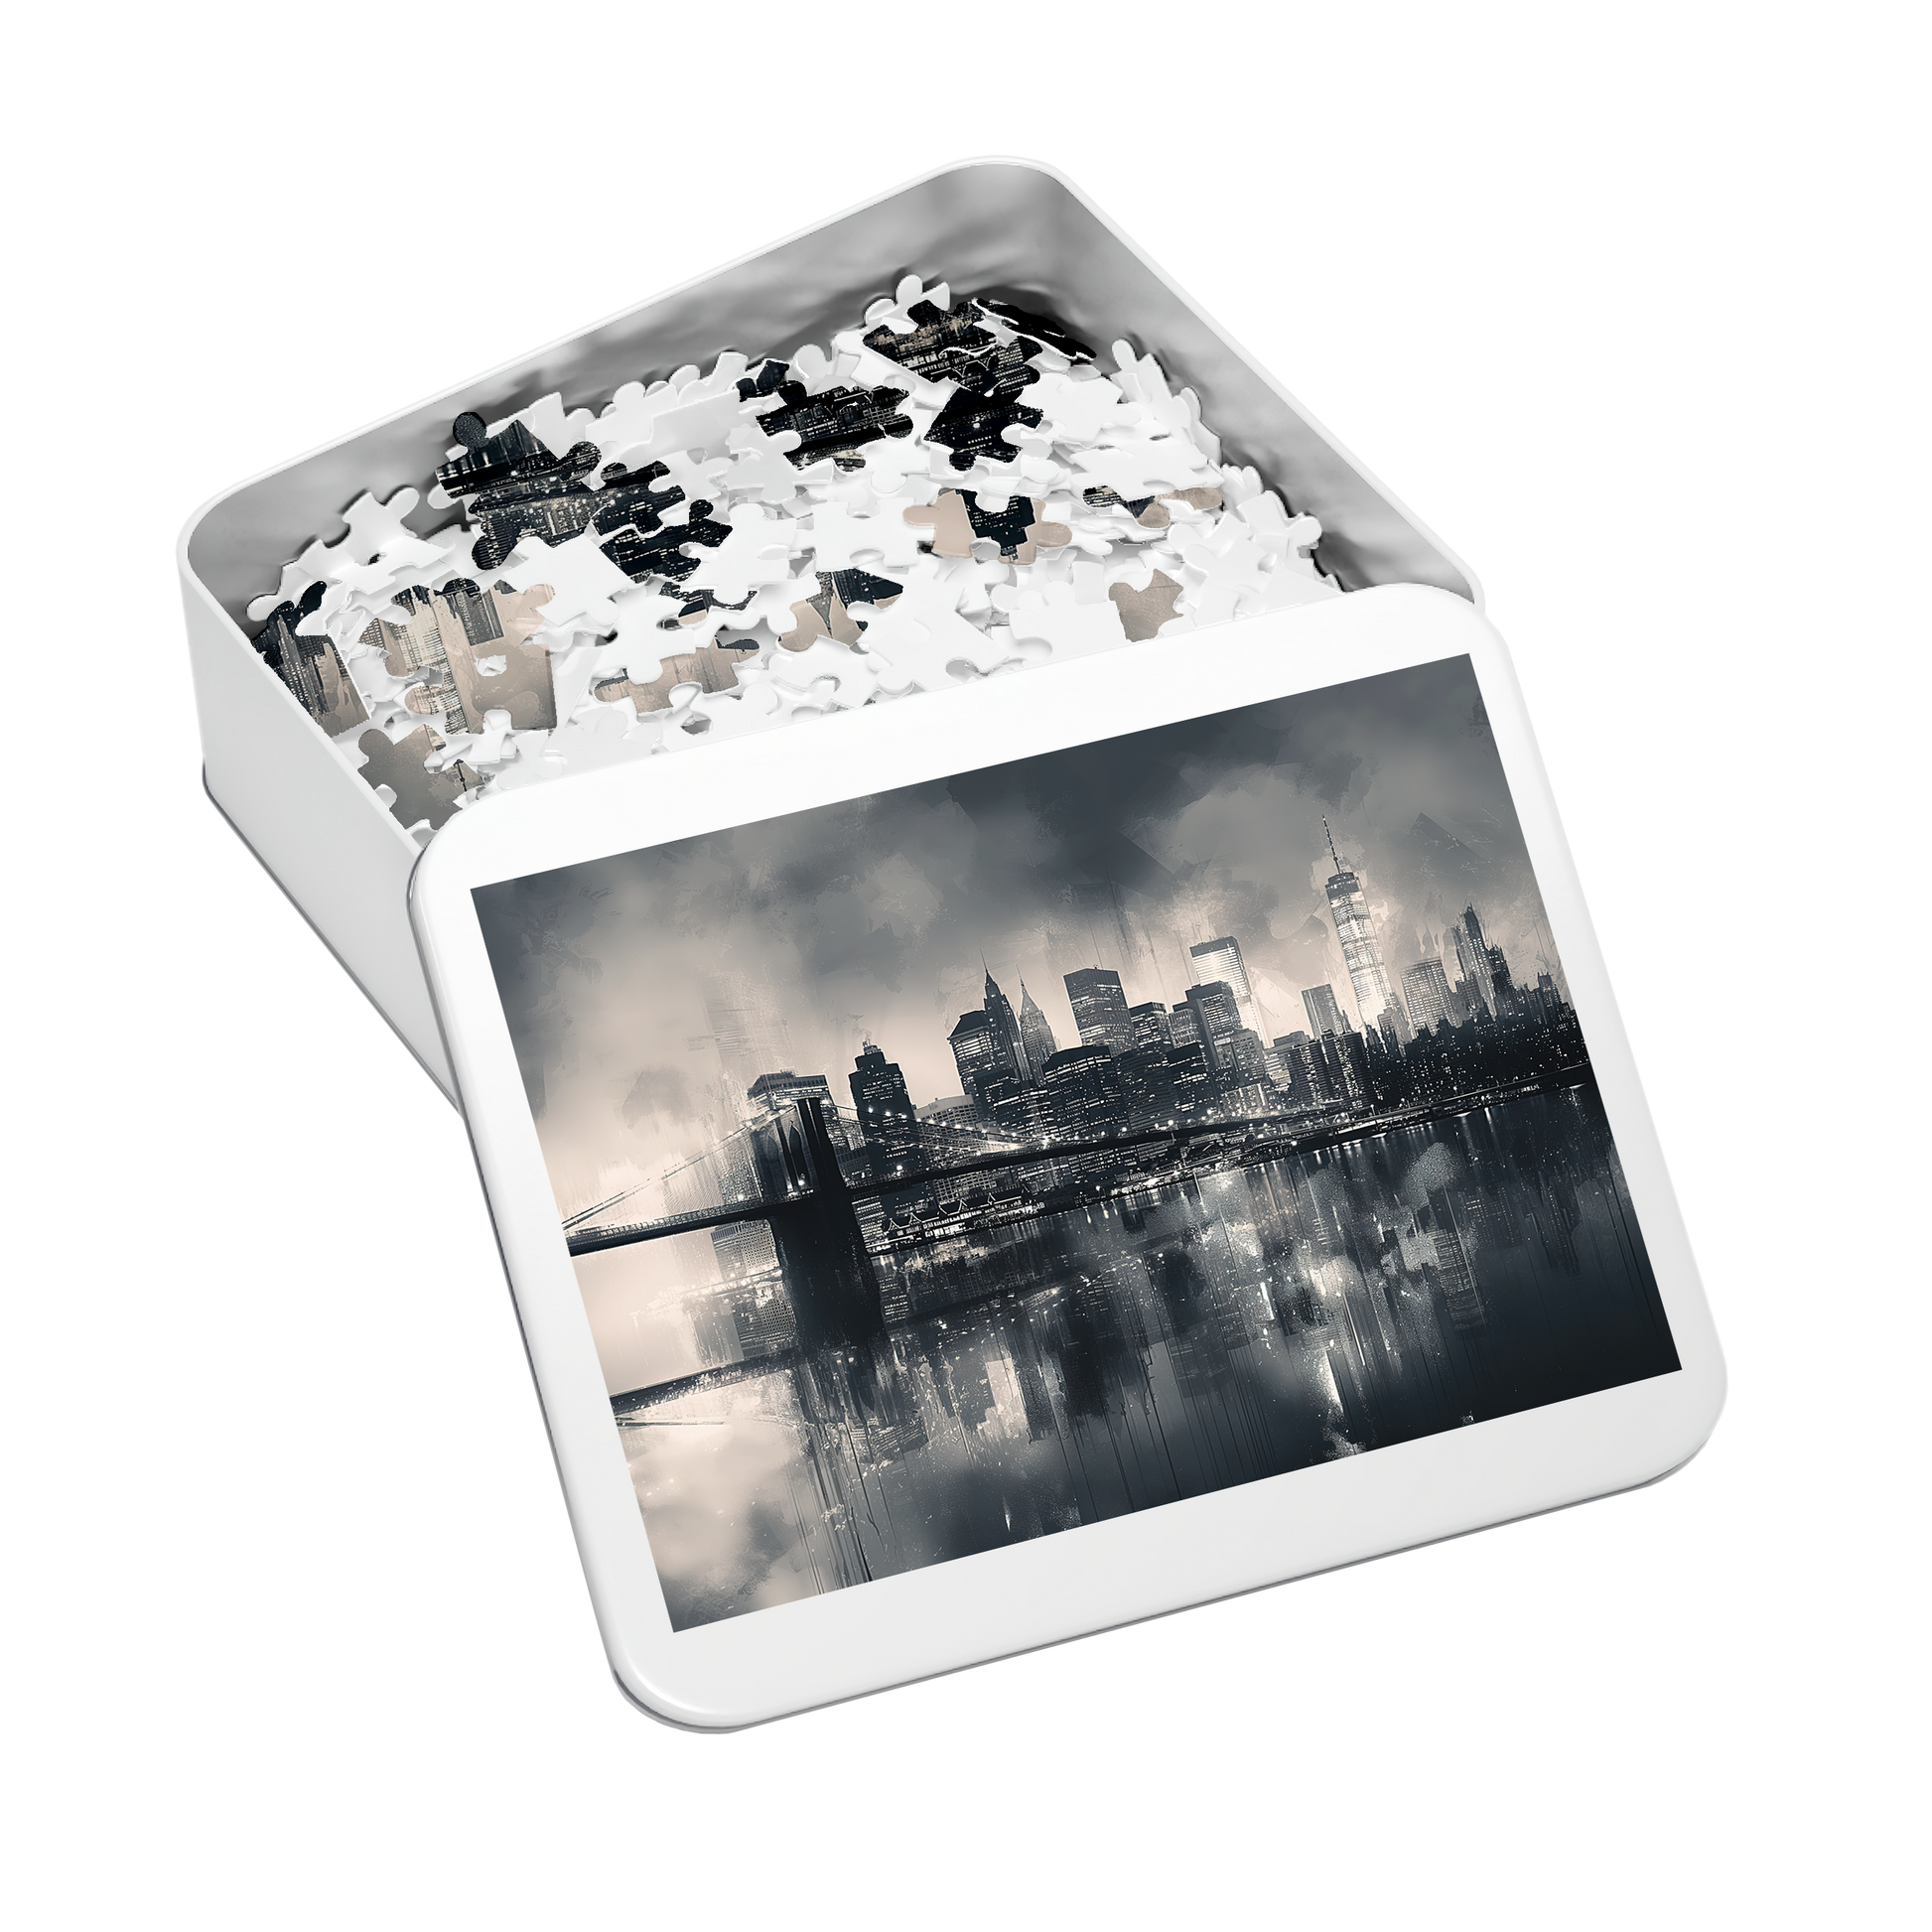 Suspension - Premium Jigsaw Puzzle - Black and White, Cityscape, River Bridge, Mist - Multiple Sizes Available